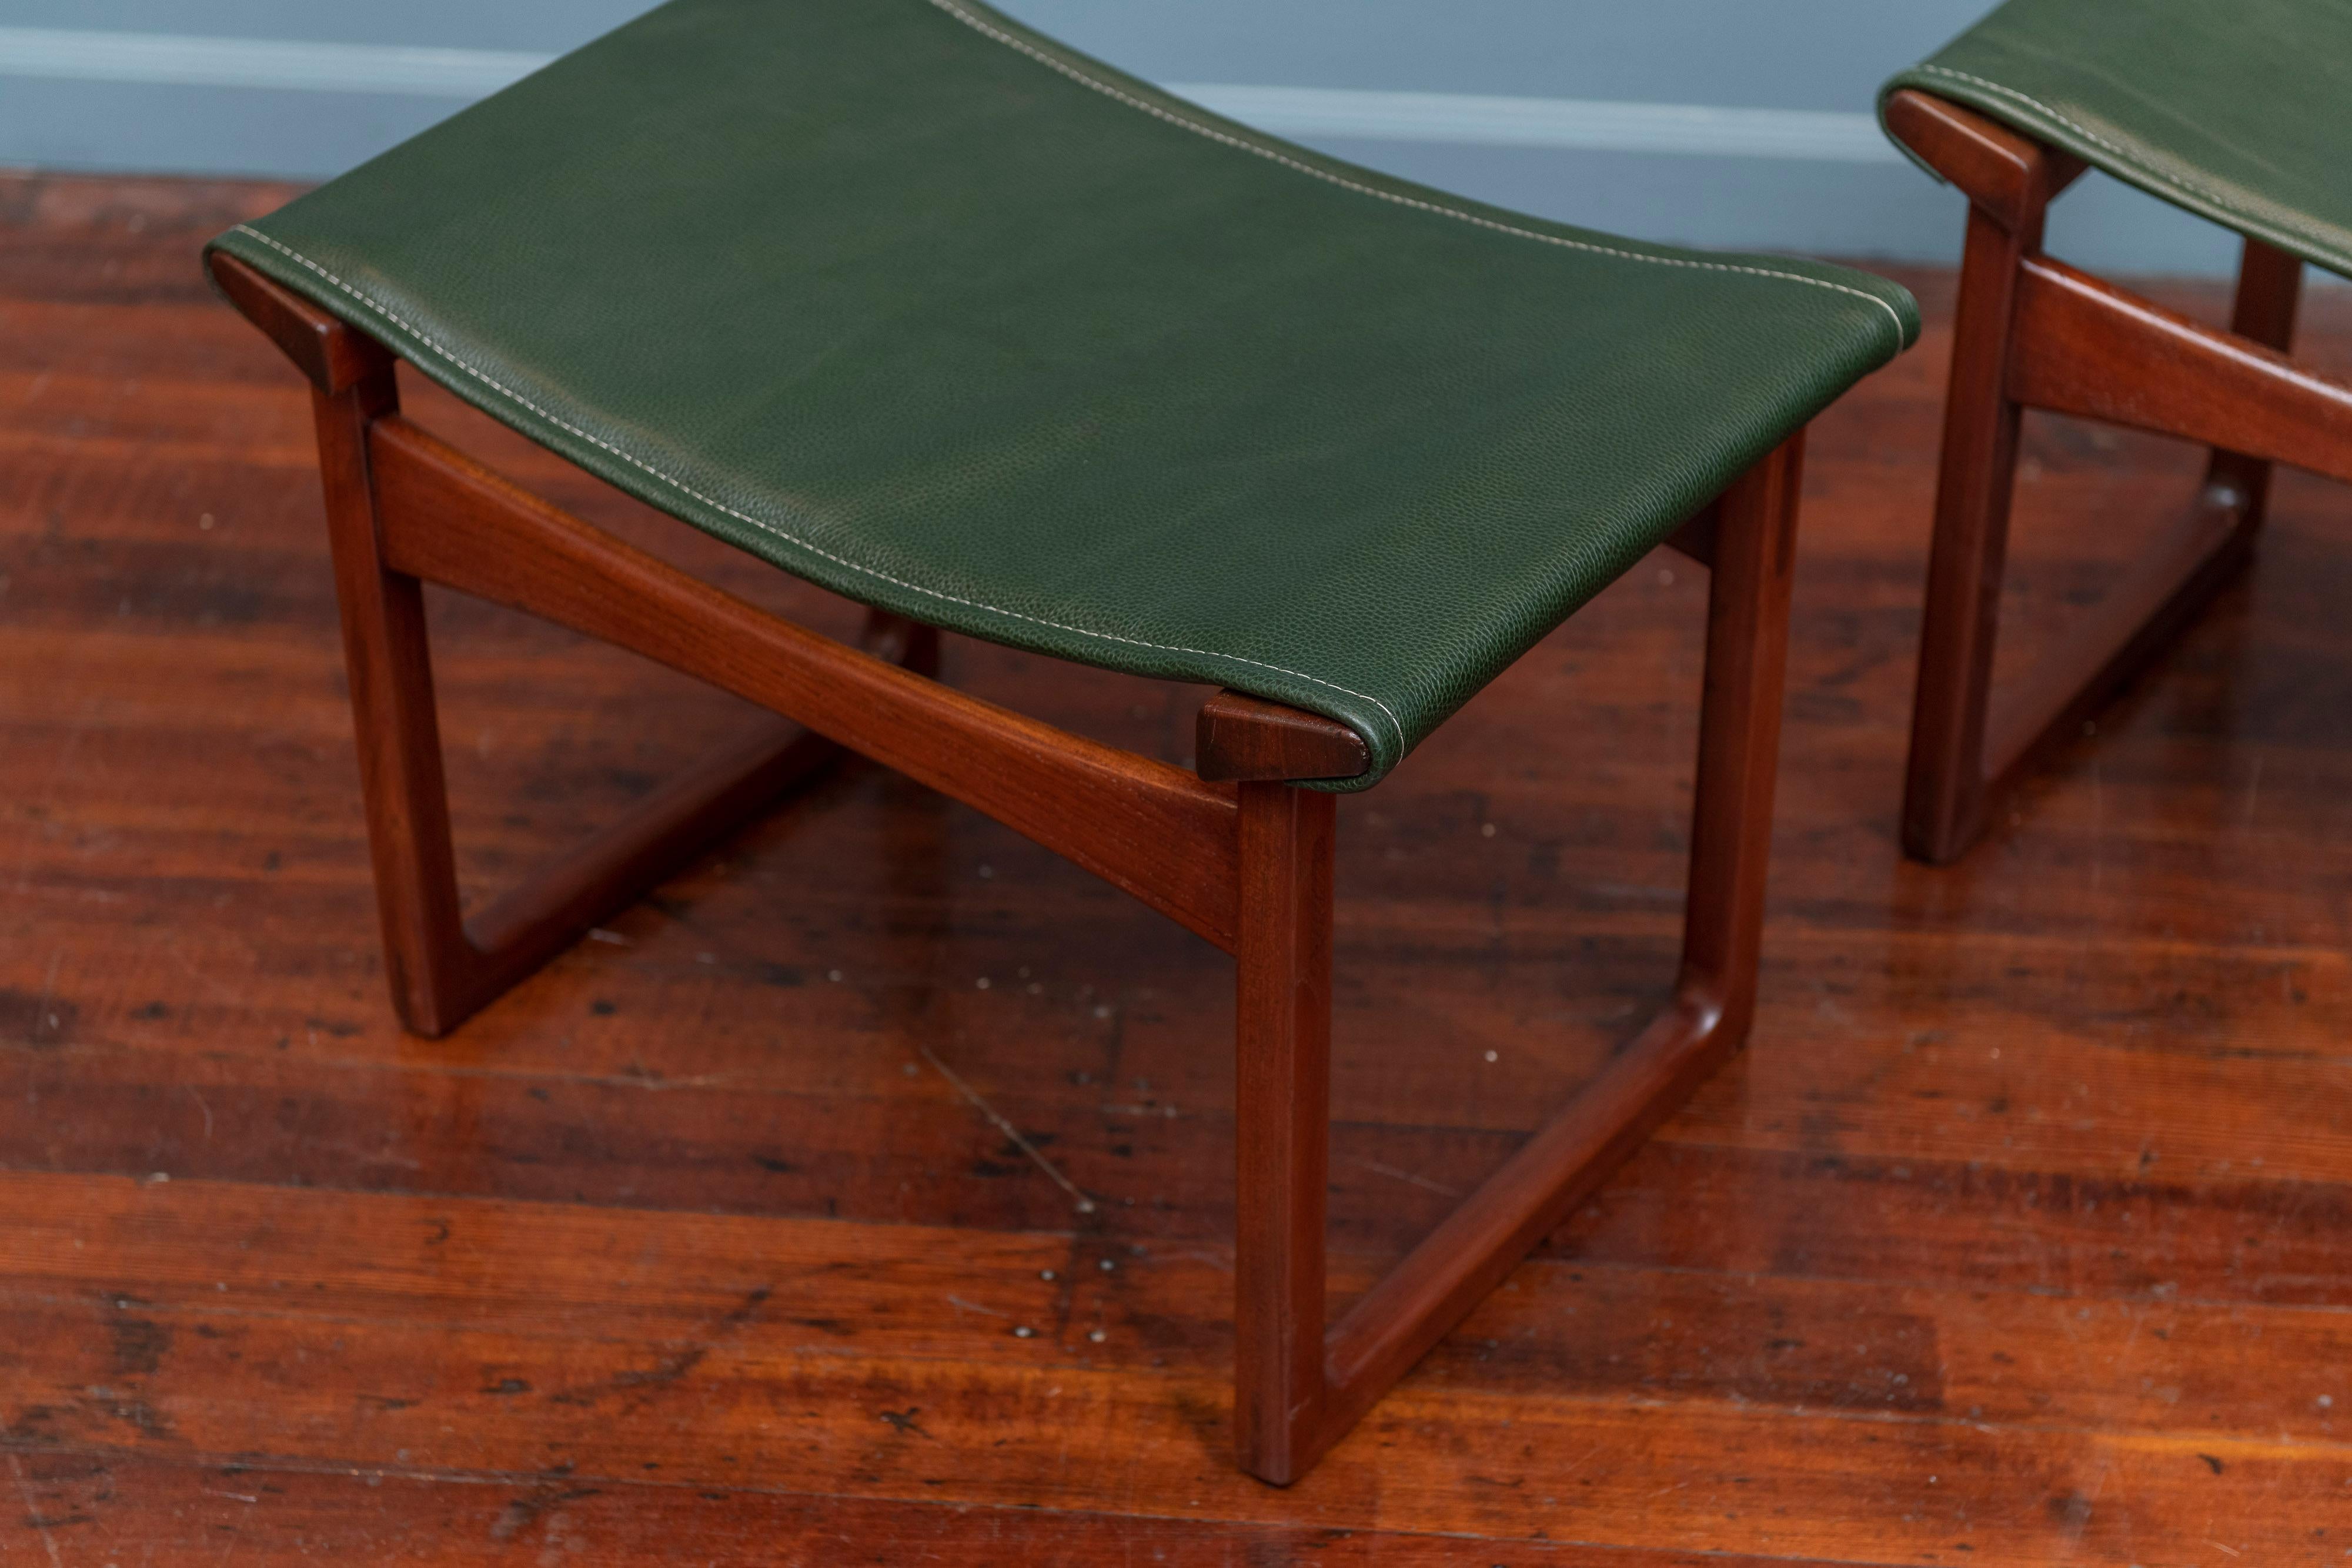 Ejner Larsen & Askel Bender Madsen design teak stools for Ludvig Pontoppidan, Denmark. High quality design and construction just newly refinished and ready to be enjoyed.